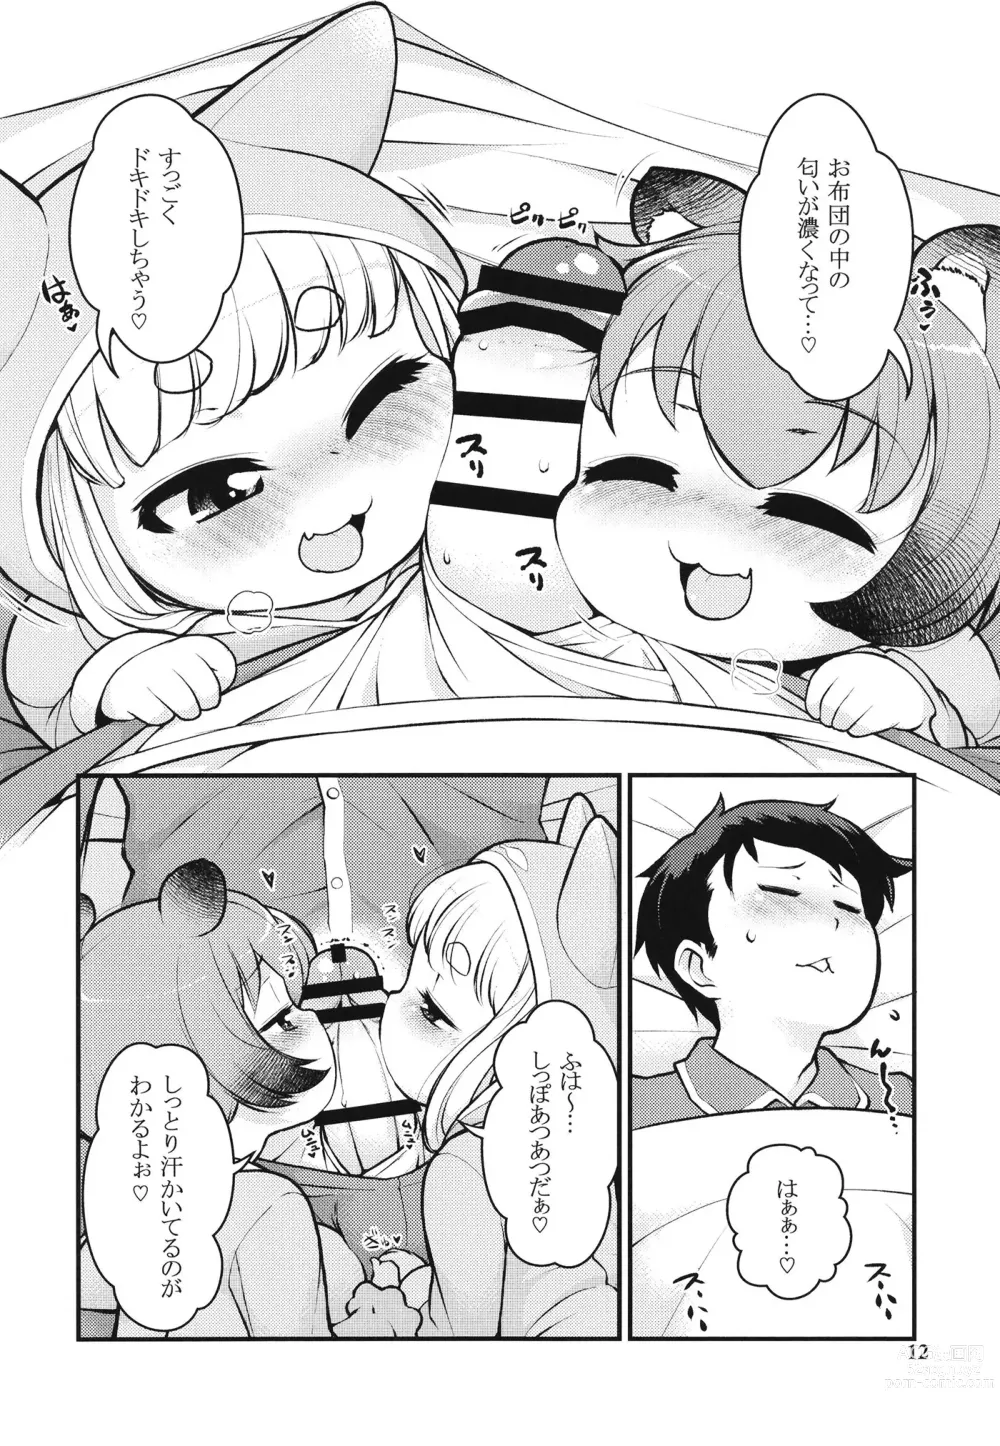 Page 11 of doujinshi KemoMimi Morning Routine 2